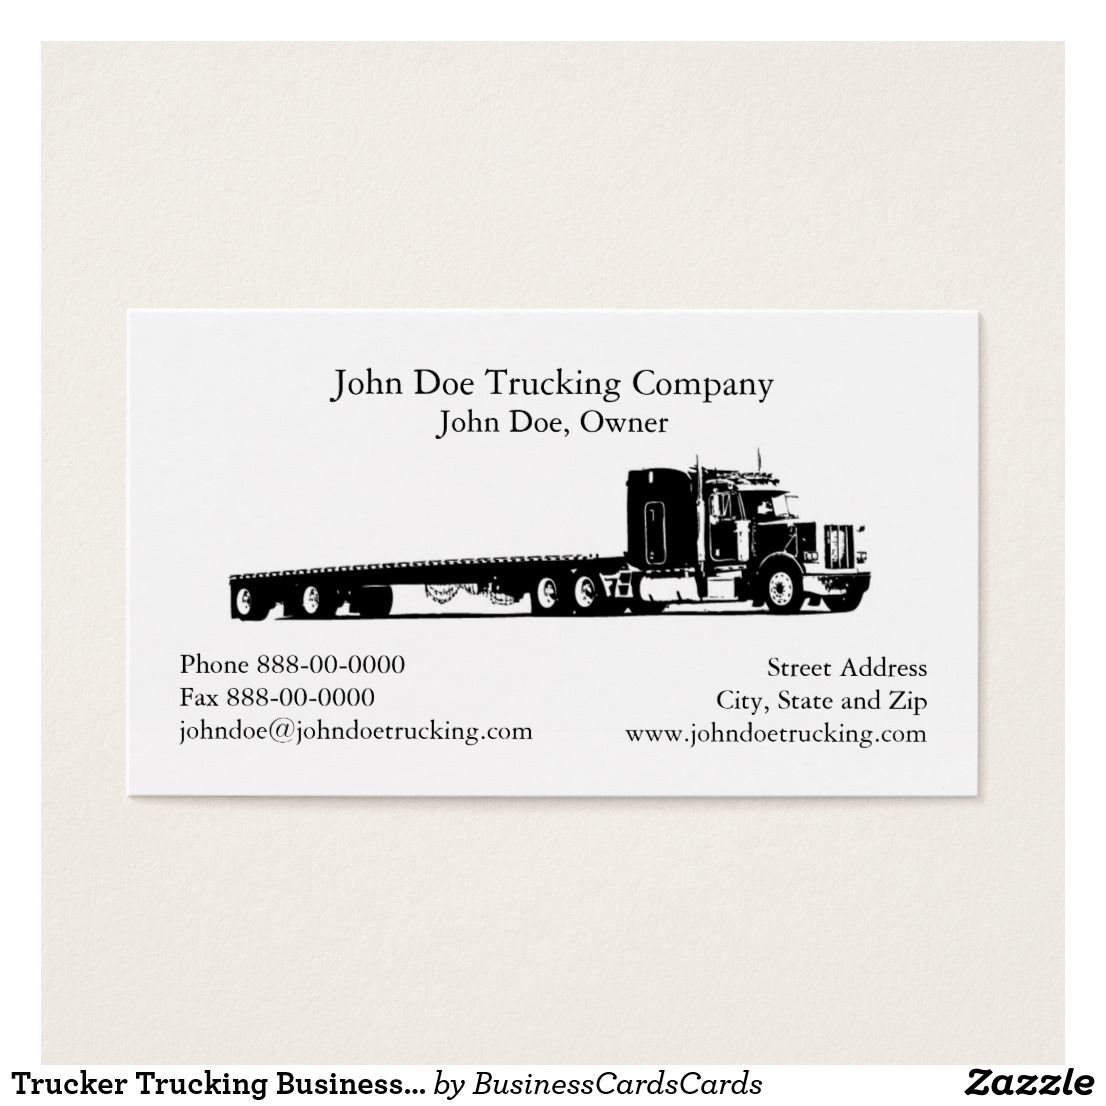 hotshot trucking business cards 2